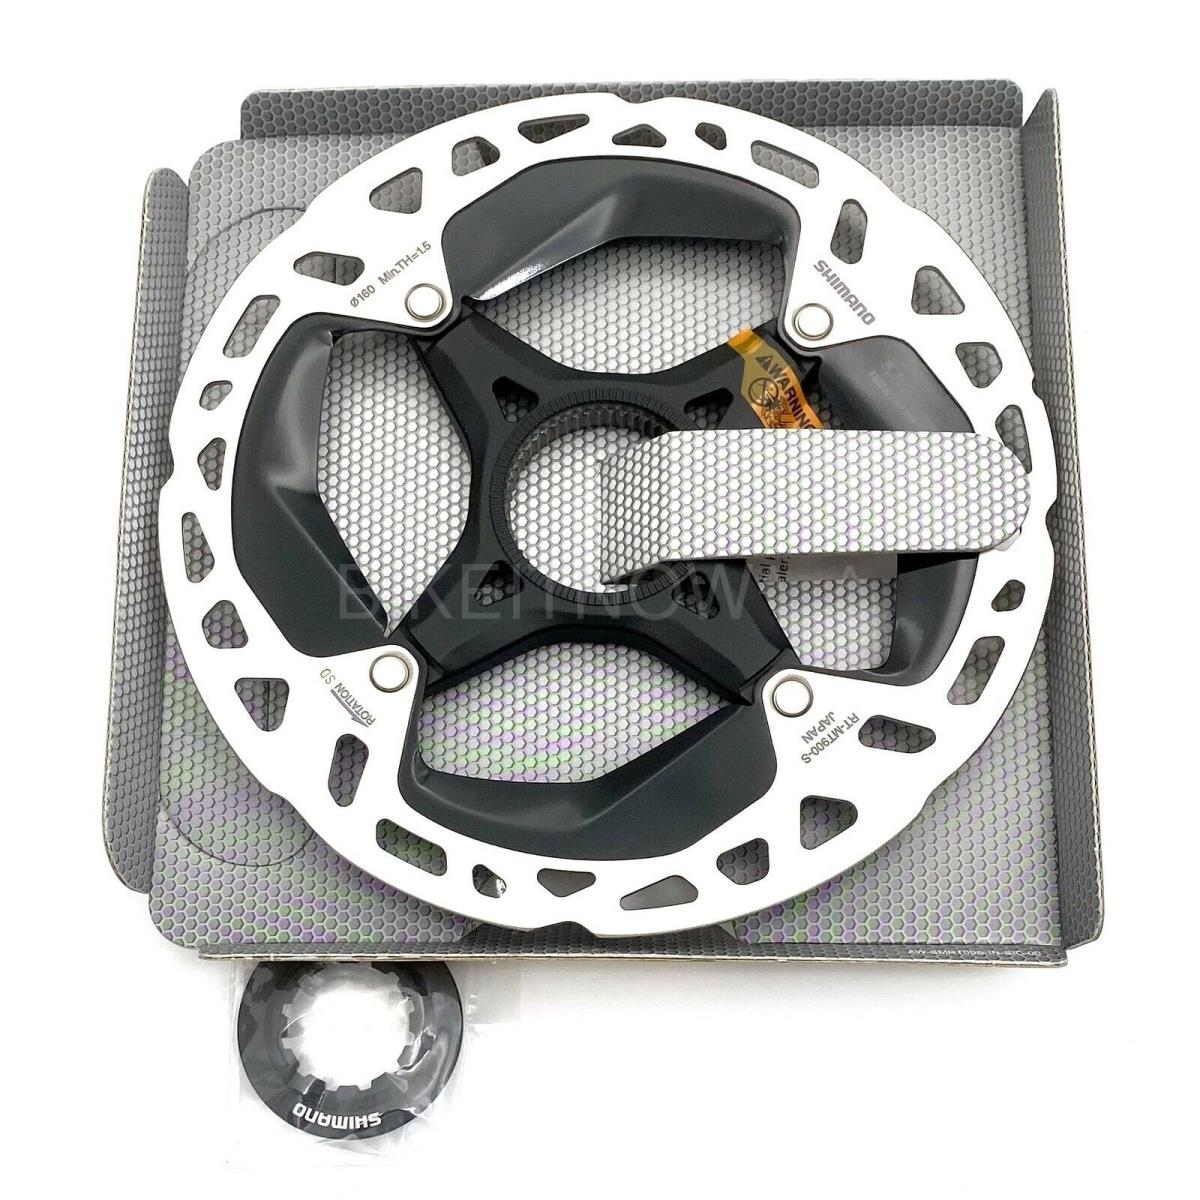 Shimano RT-MT900 Xtr/saint Center Lock Disc Brake Rotors 160mm